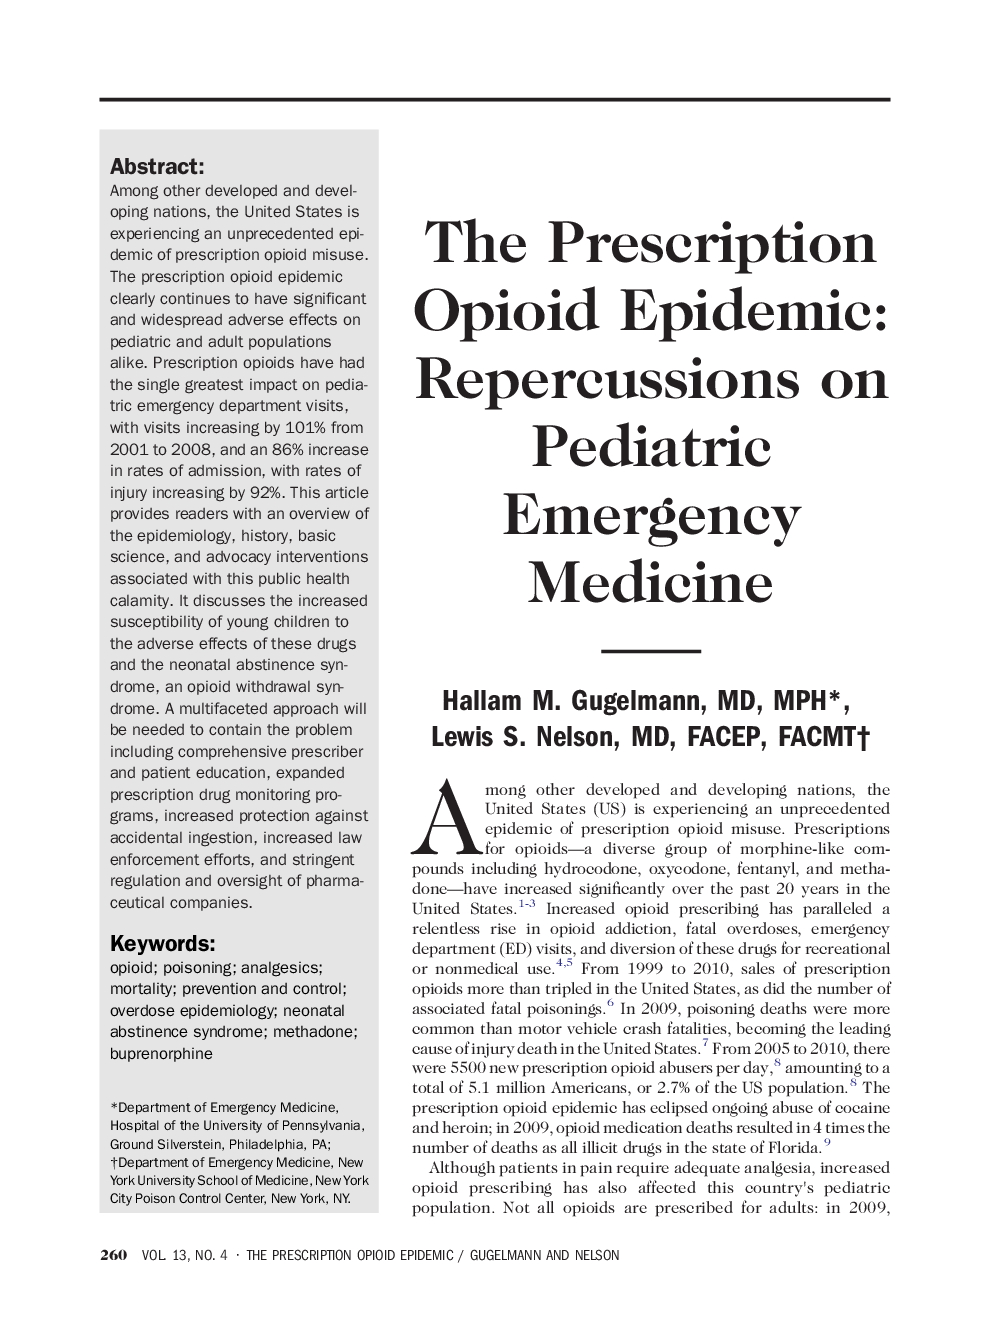 The Prescription Opioid Epidemic: Repercussions on Pediatric Emergency Medicine